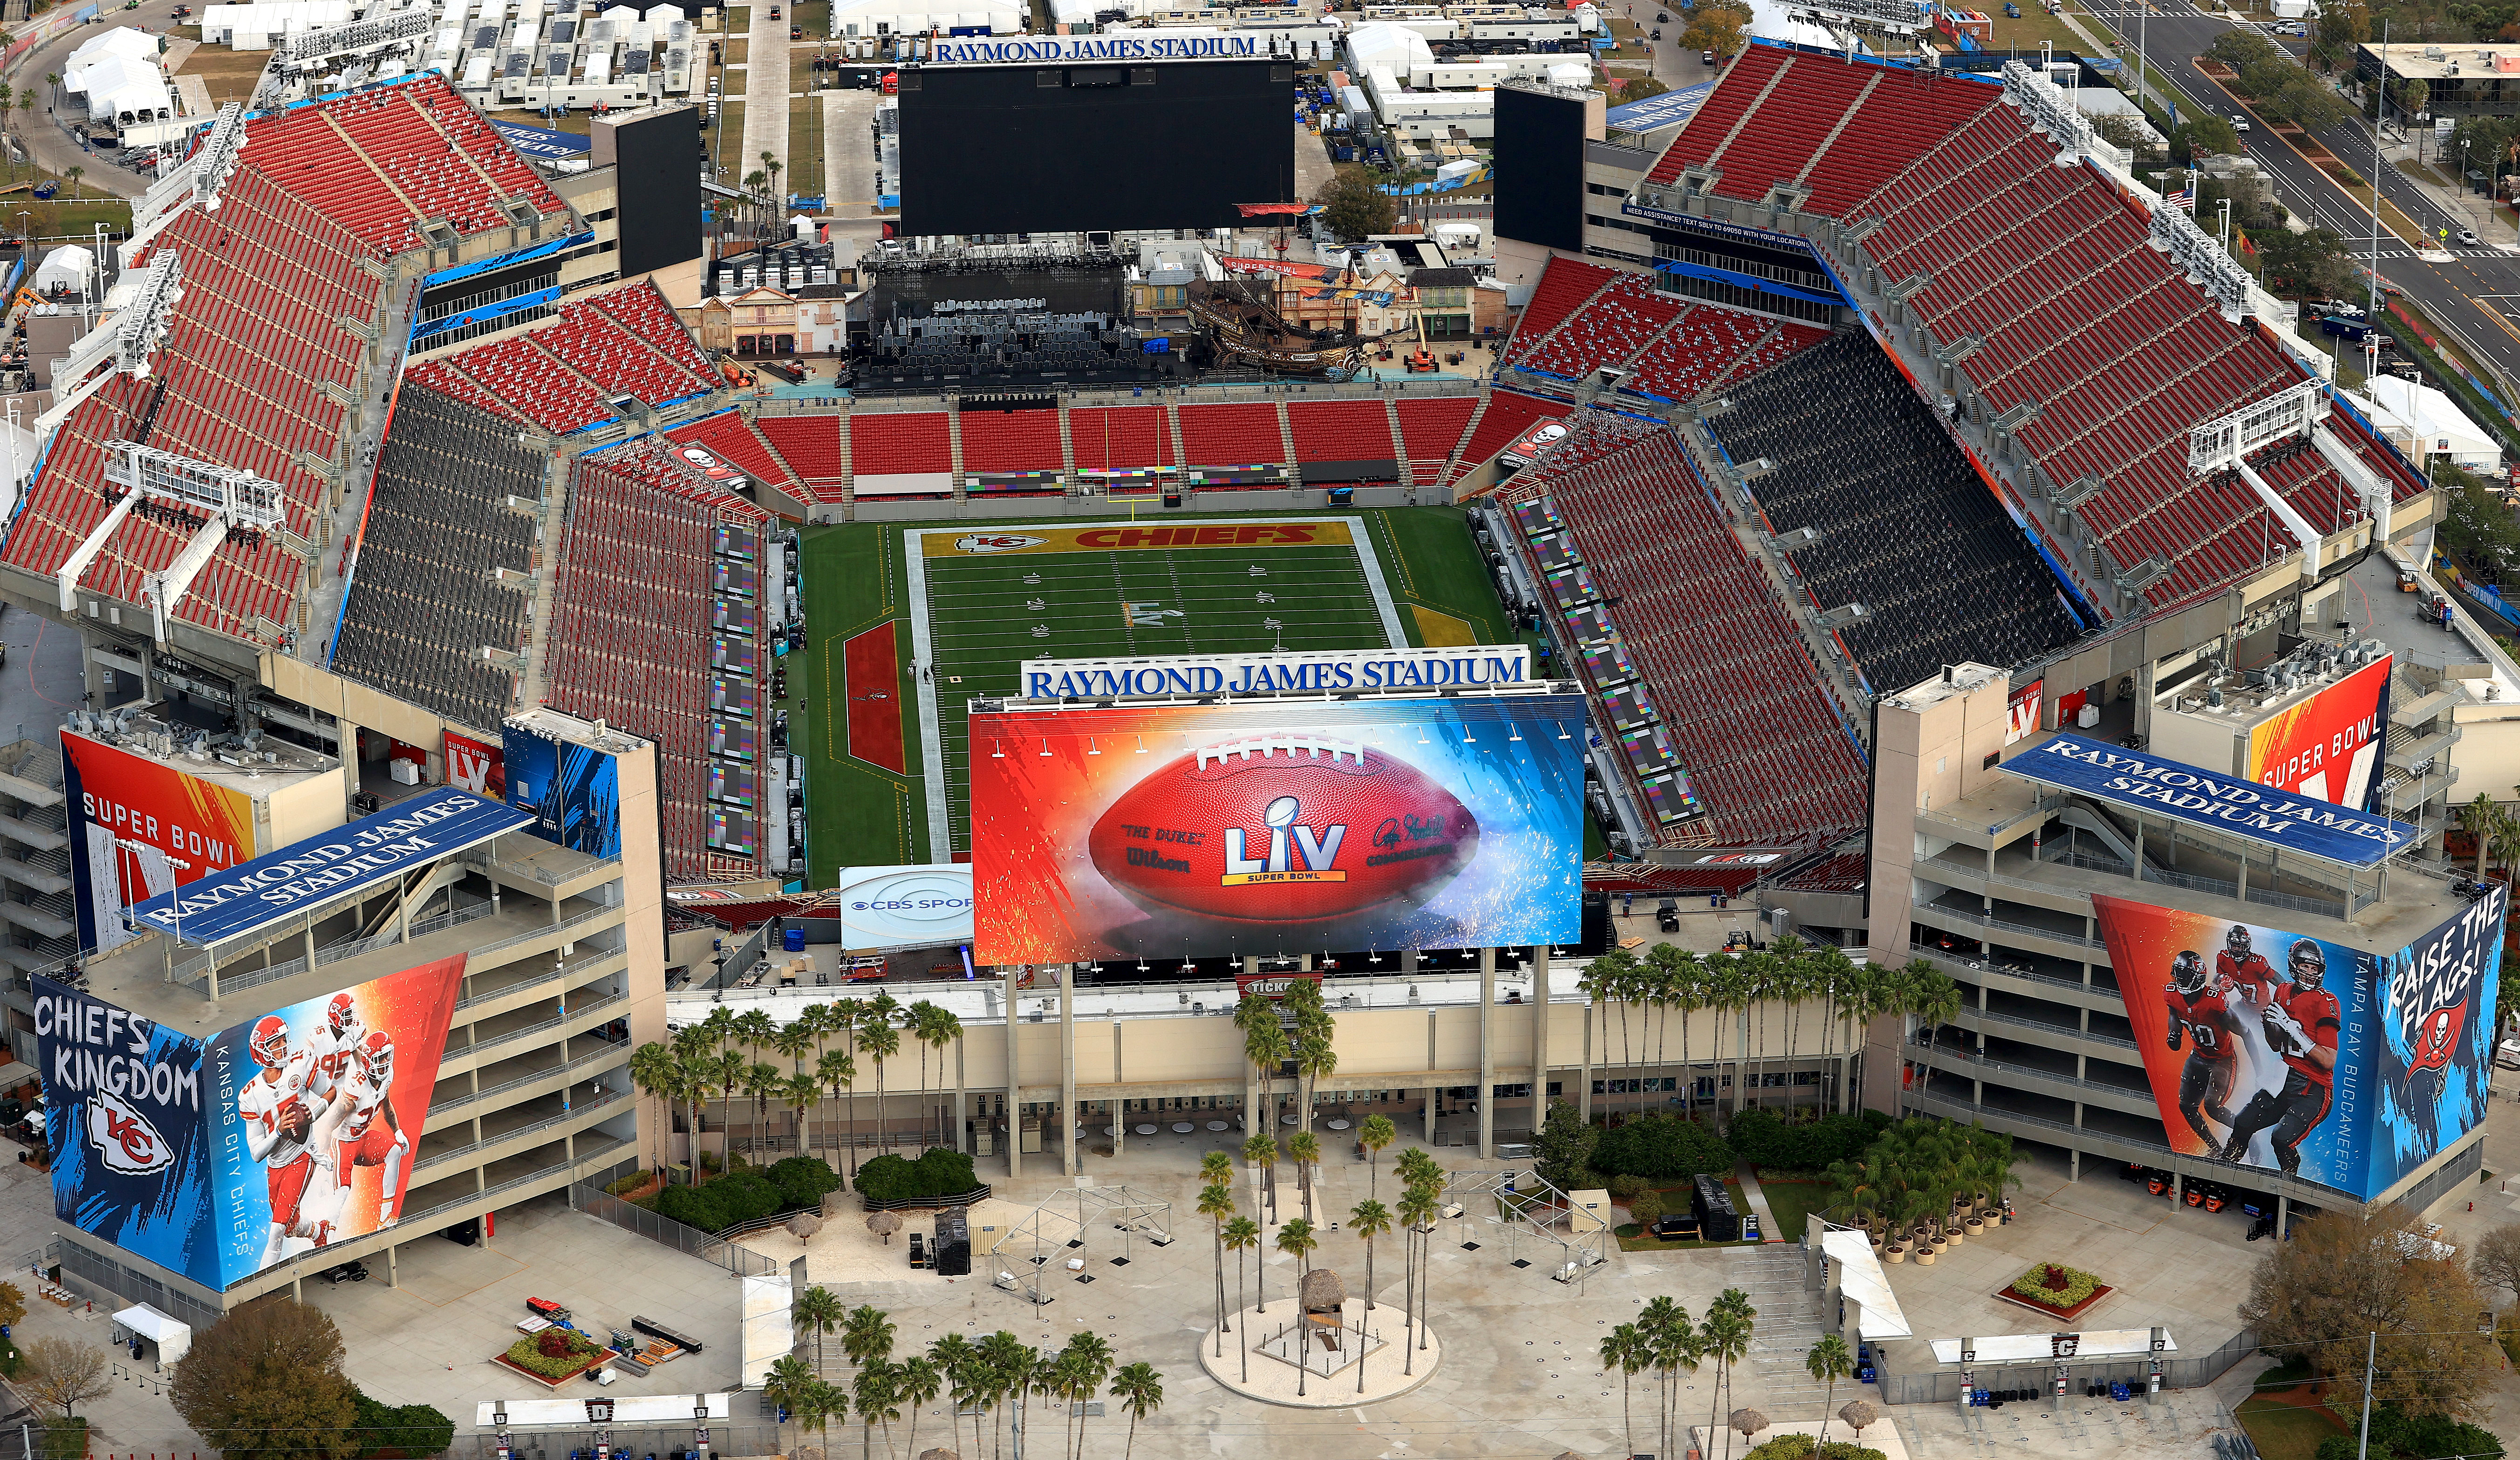 Super Bowl LV (55) Live Online - Official CBS Broadcast Stream - Sunday,  Feb 7, 2021 